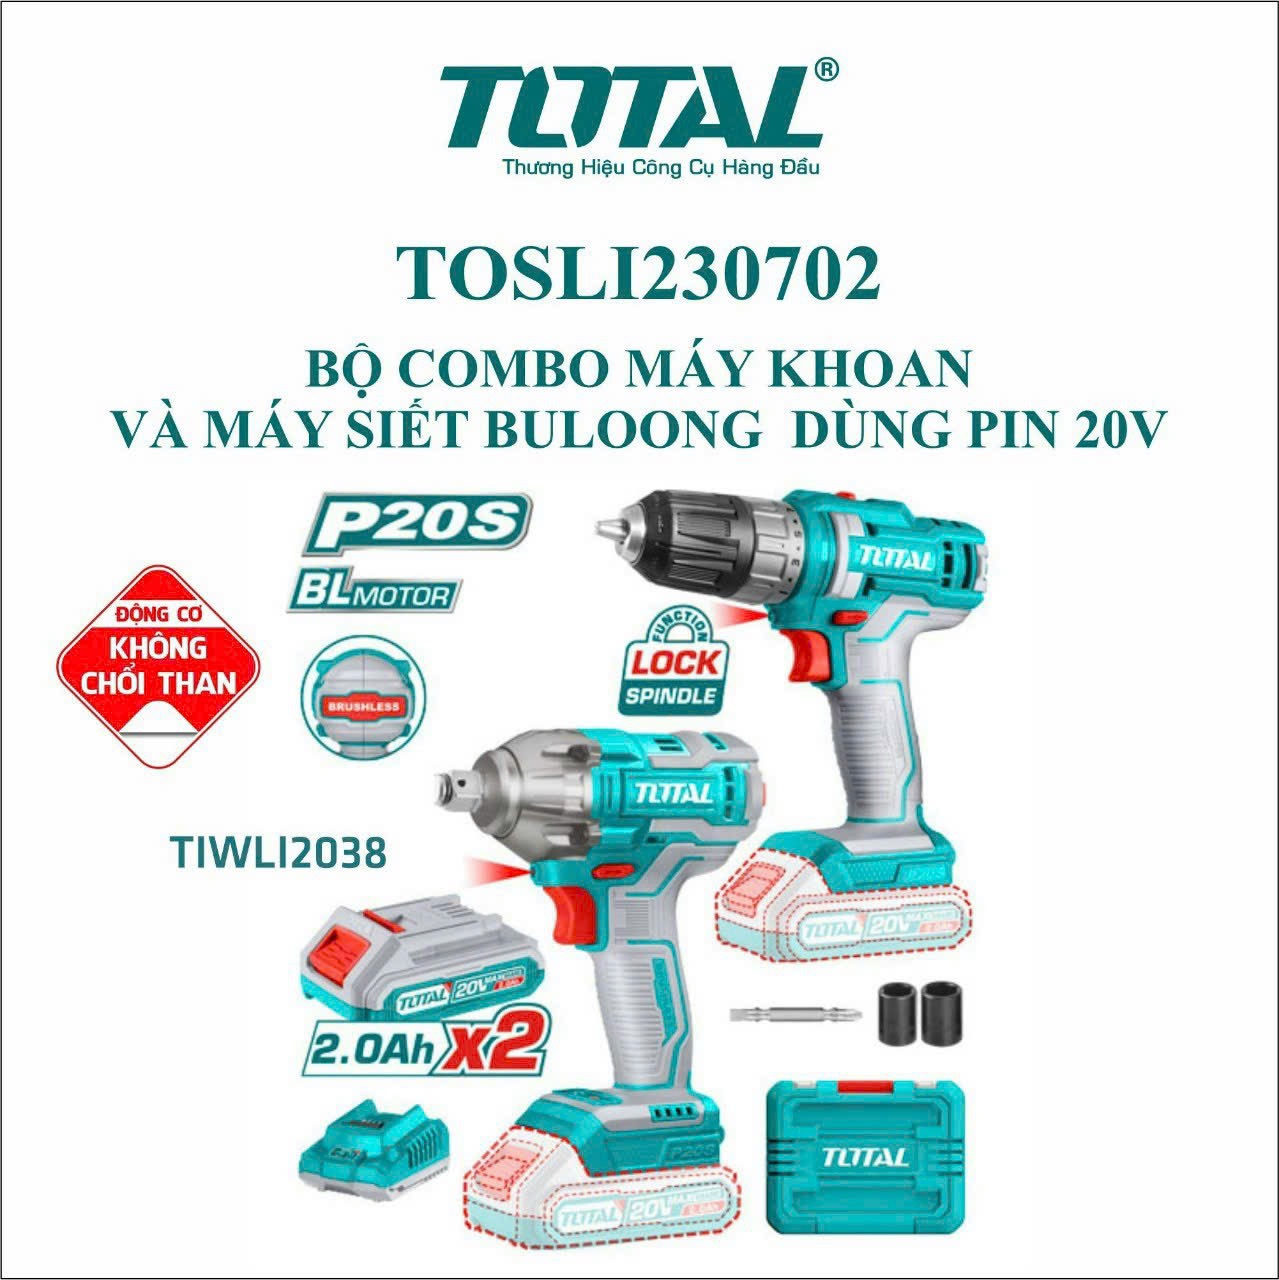 tosli230702-bo-combo-may-khoan-tdli200528-va-may-siet-buloong-tiwli2038-dung-pin